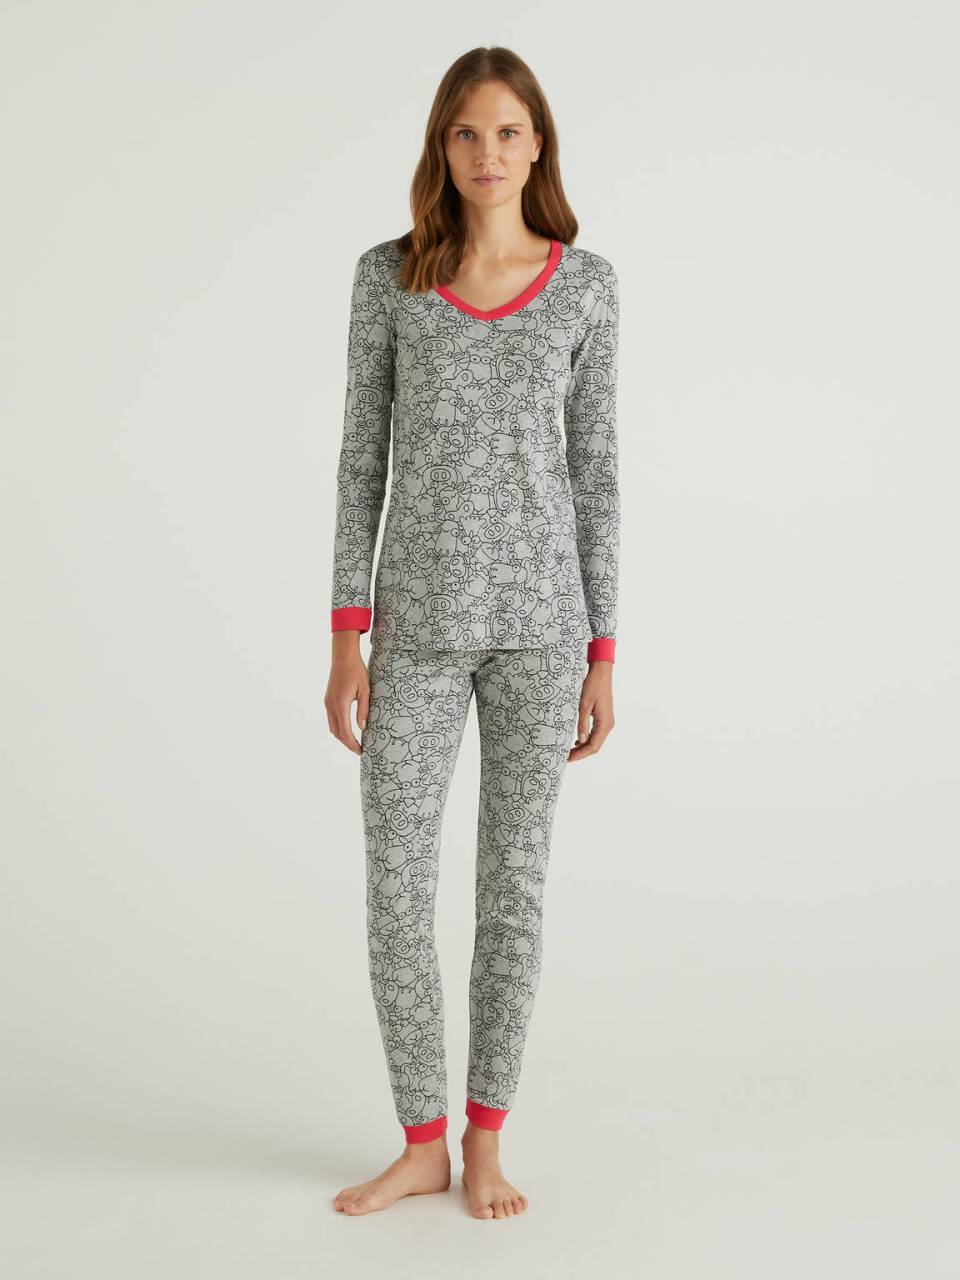 Benetton Patterned 100% cotton pyjamas. 1